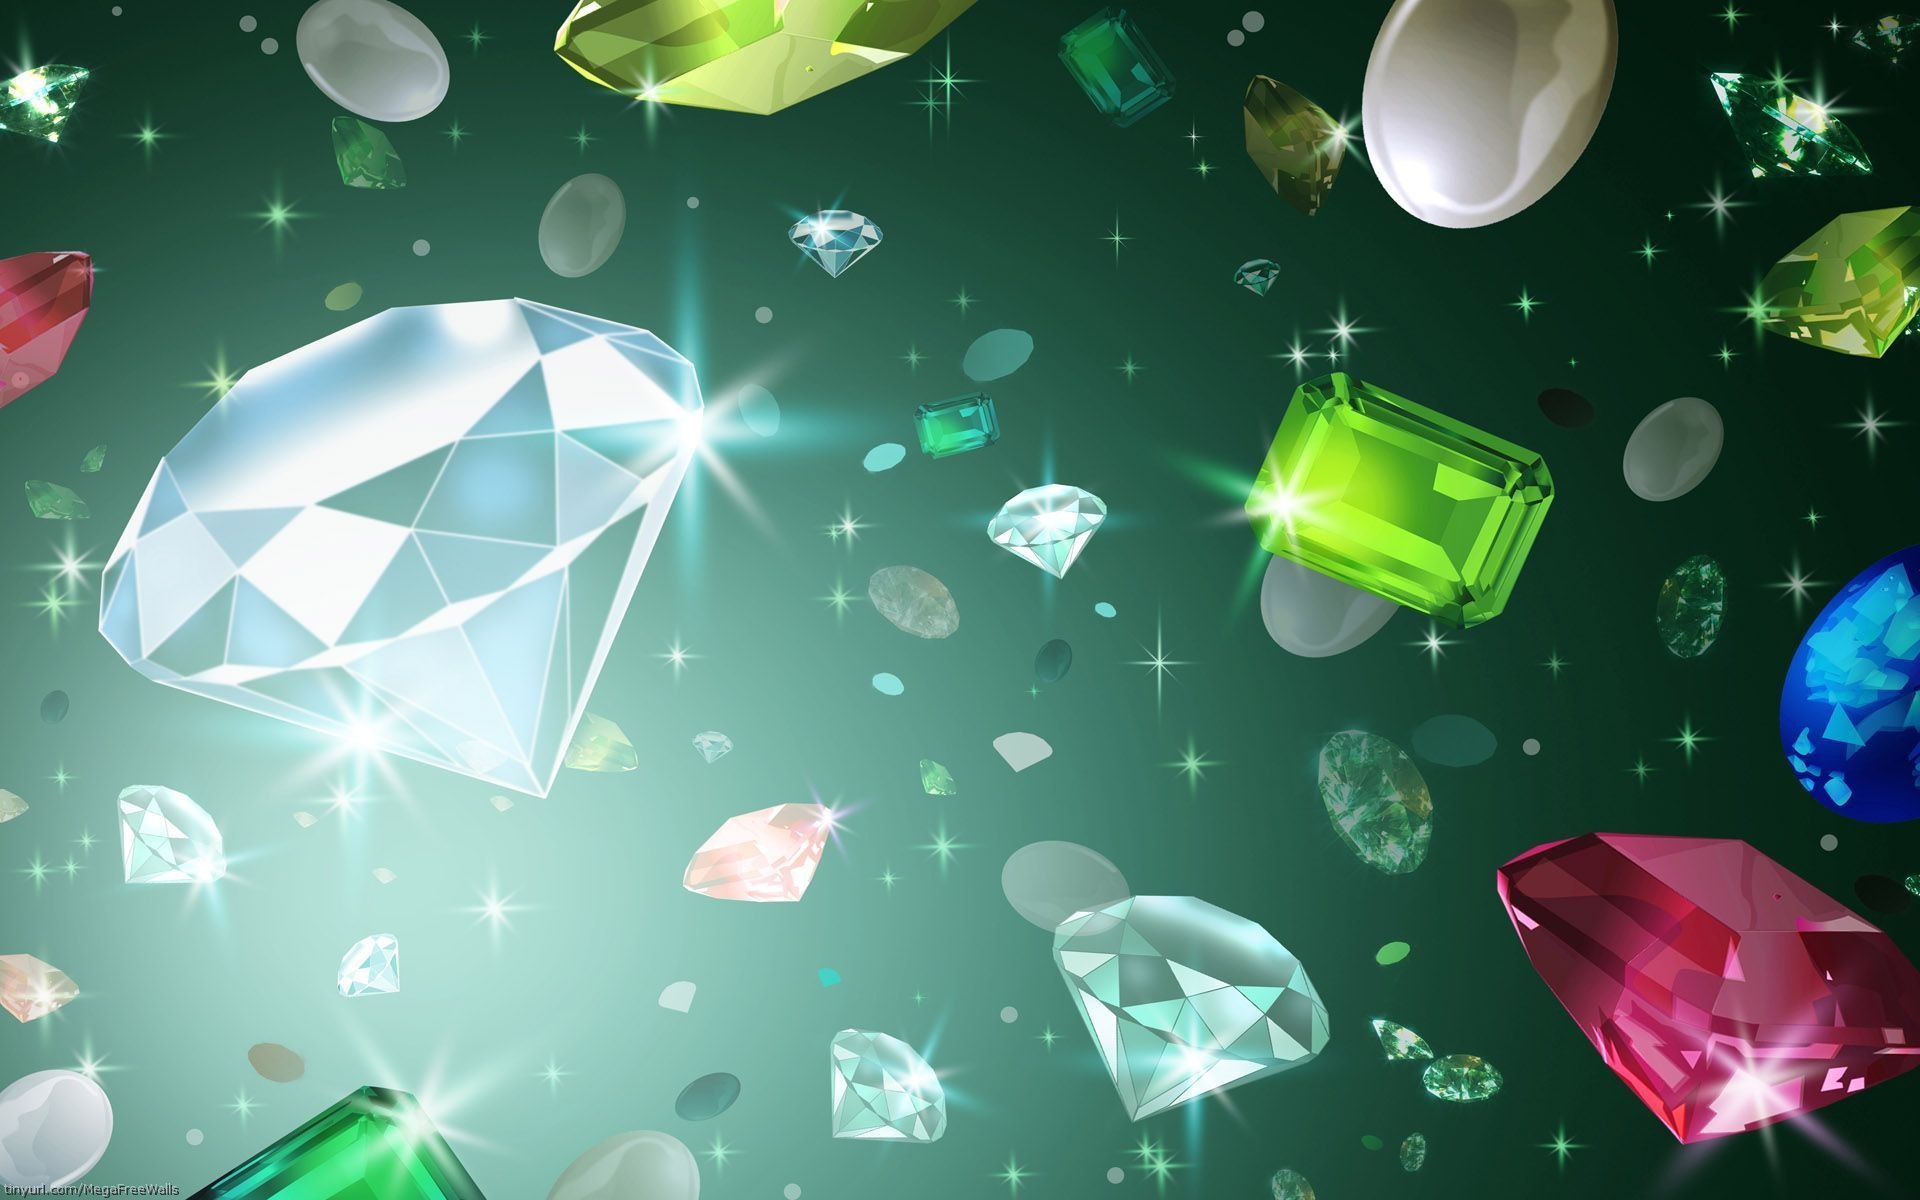 Crystal-clear diamonds, Transparent beauty, Exquisite gemstones, Prismatic reflections, 1920x1200 HD Desktop